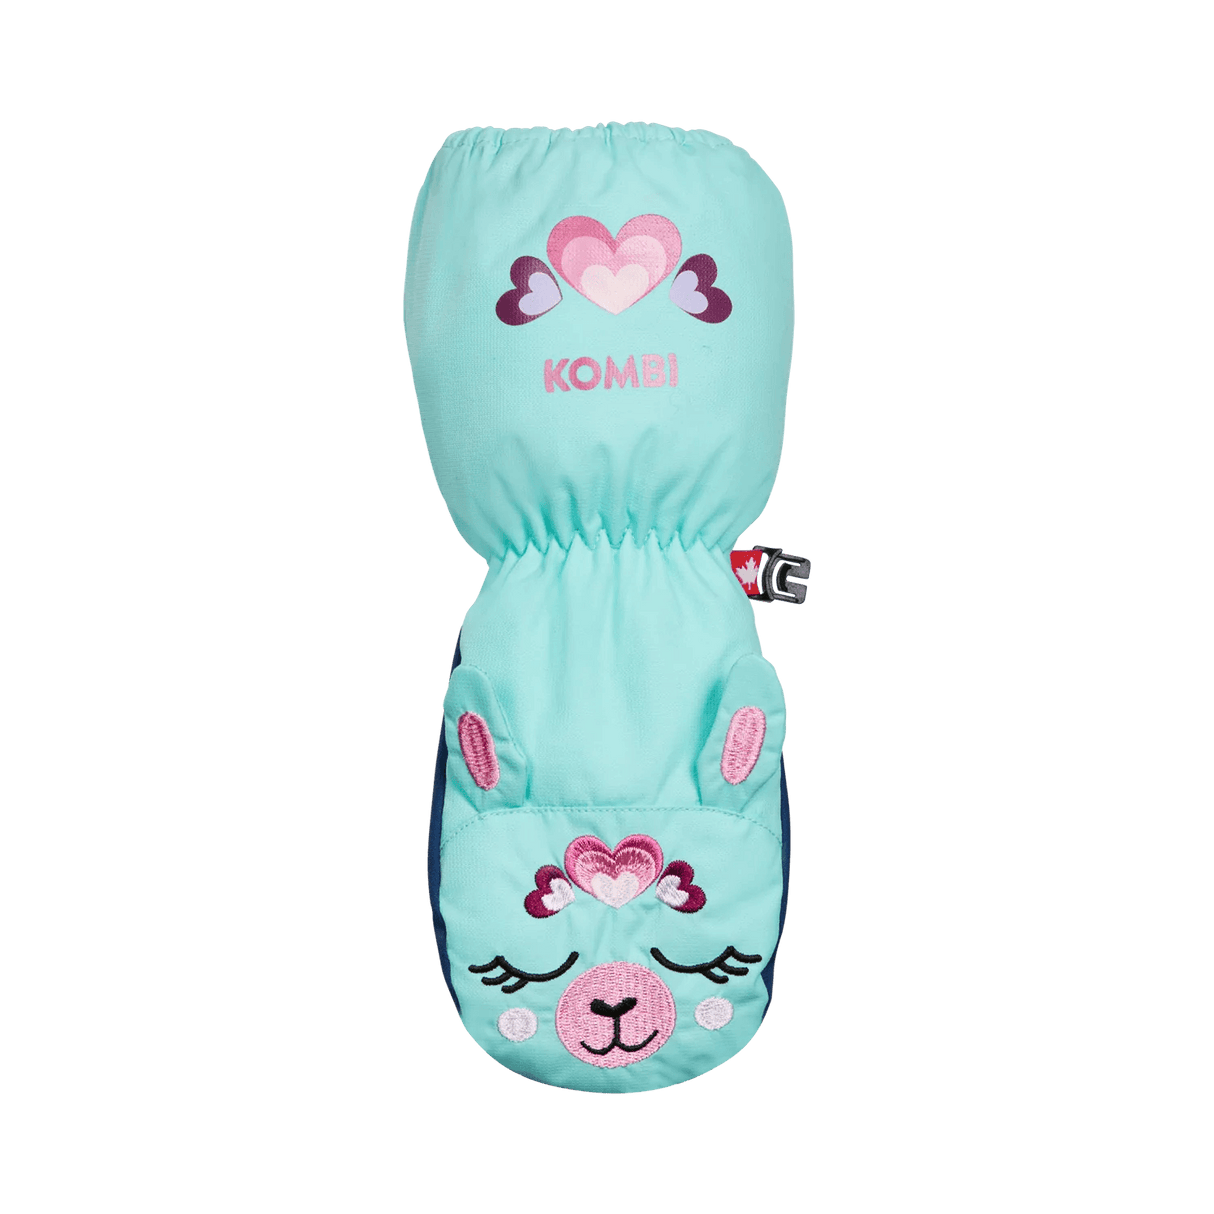 Kombi Kids Animal Family Mittens - A&M Clothing & Shoes